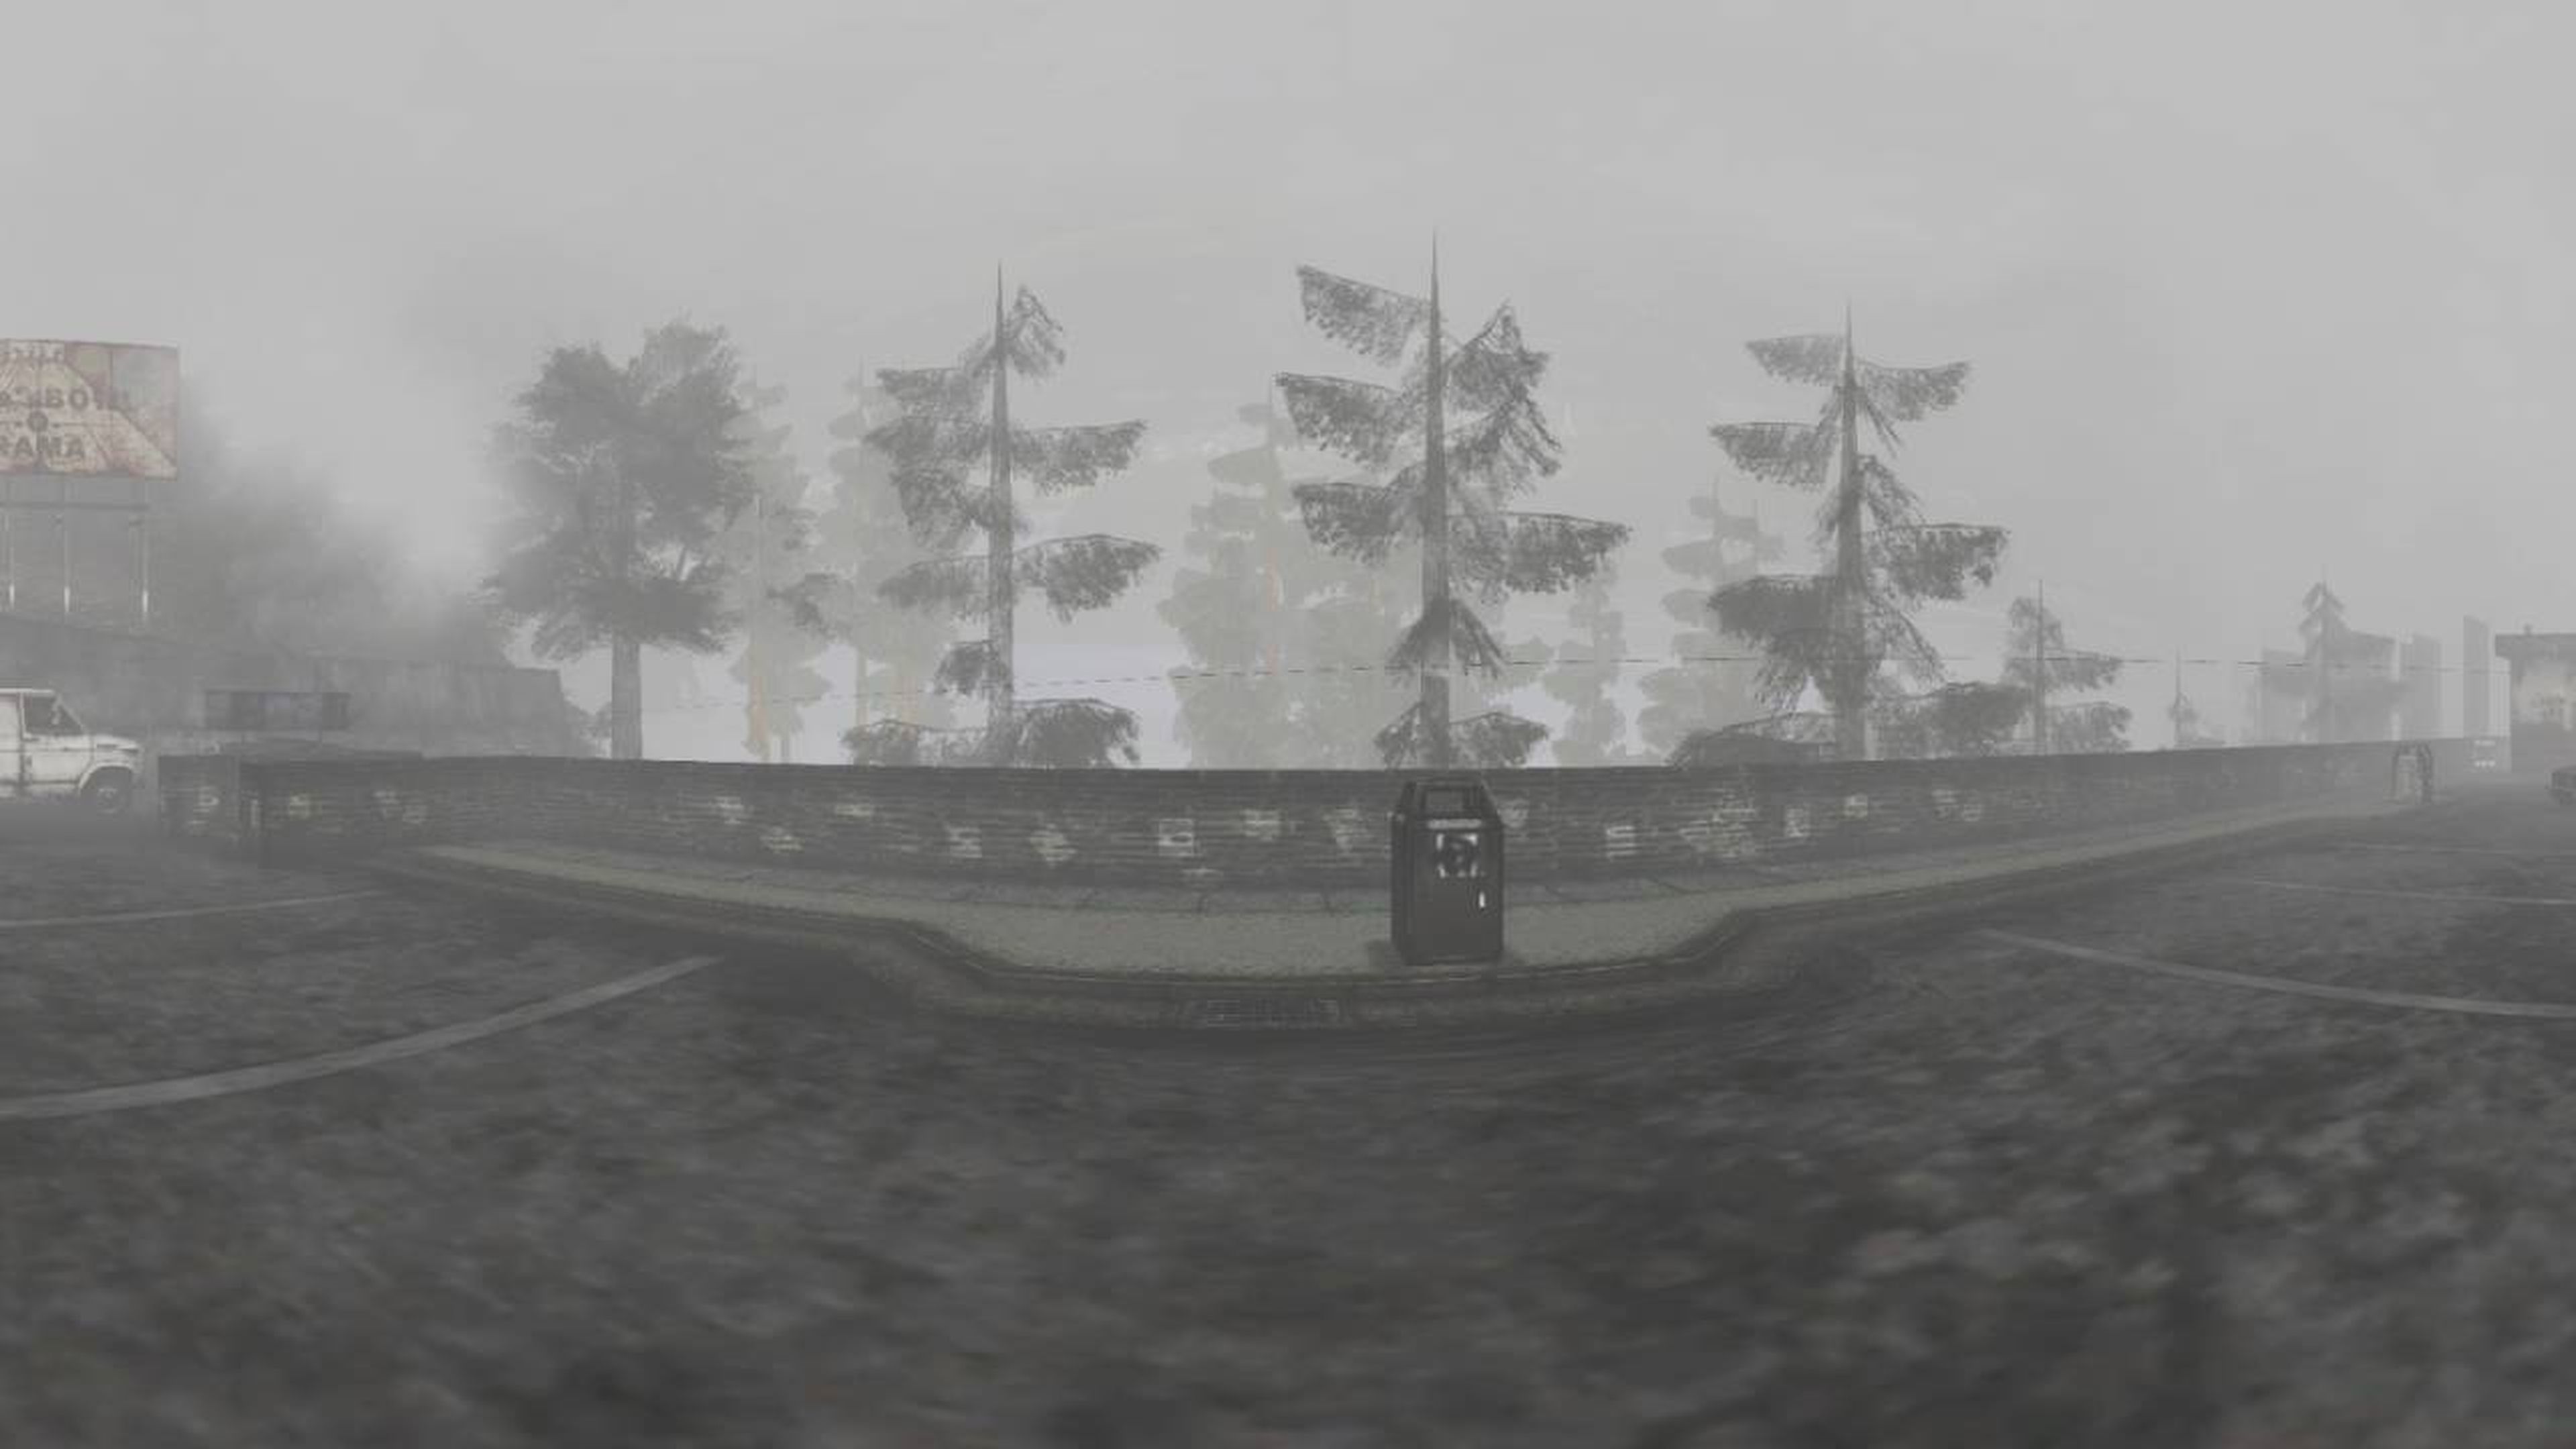 Silent Hill 2 VR